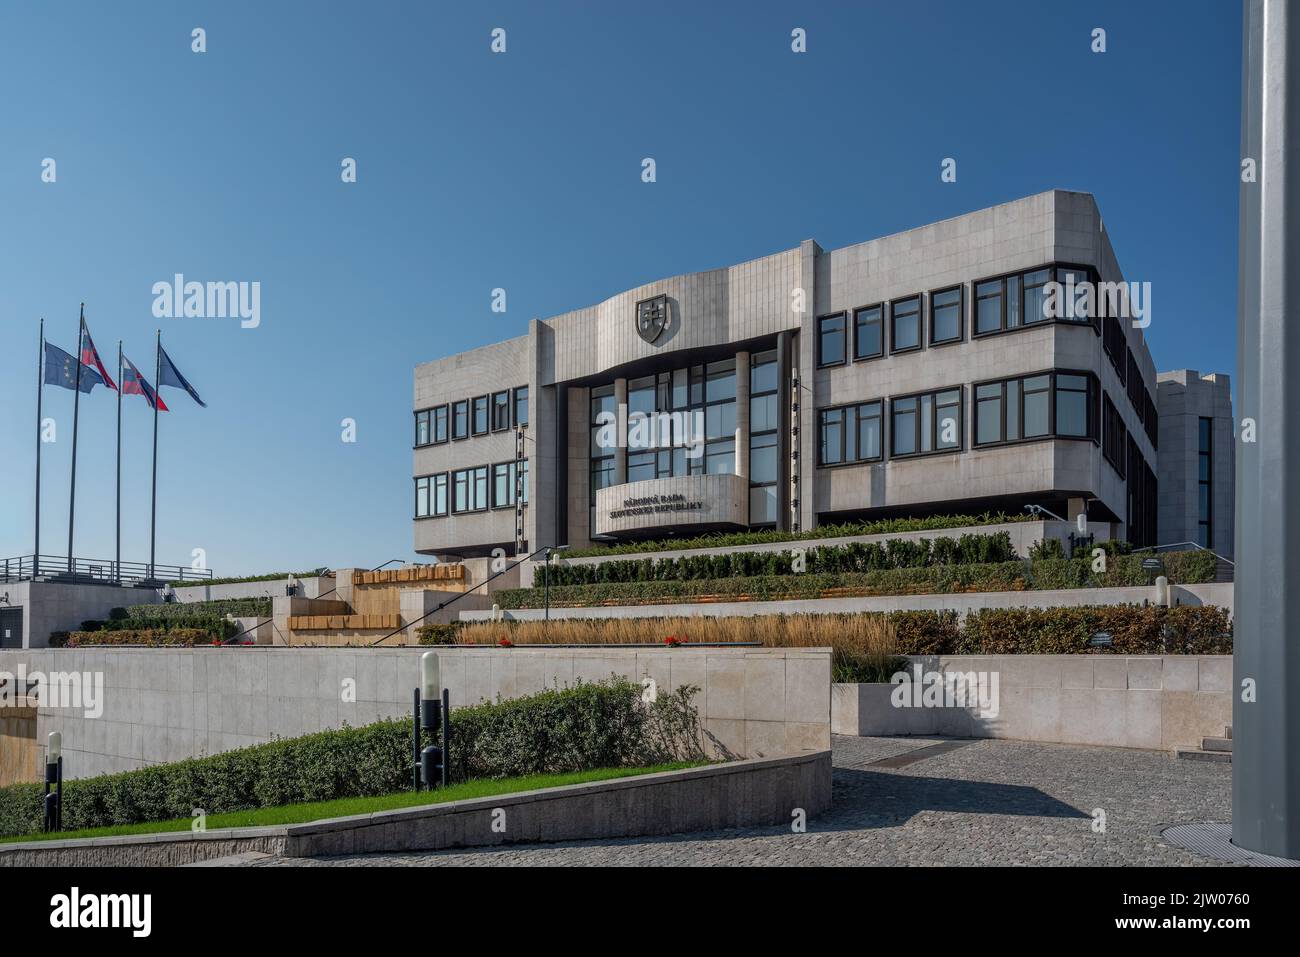 Nationalrat der Slowakischen Republik - Slowakisches Parlament - Bratislava, Slowakei Stockfoto